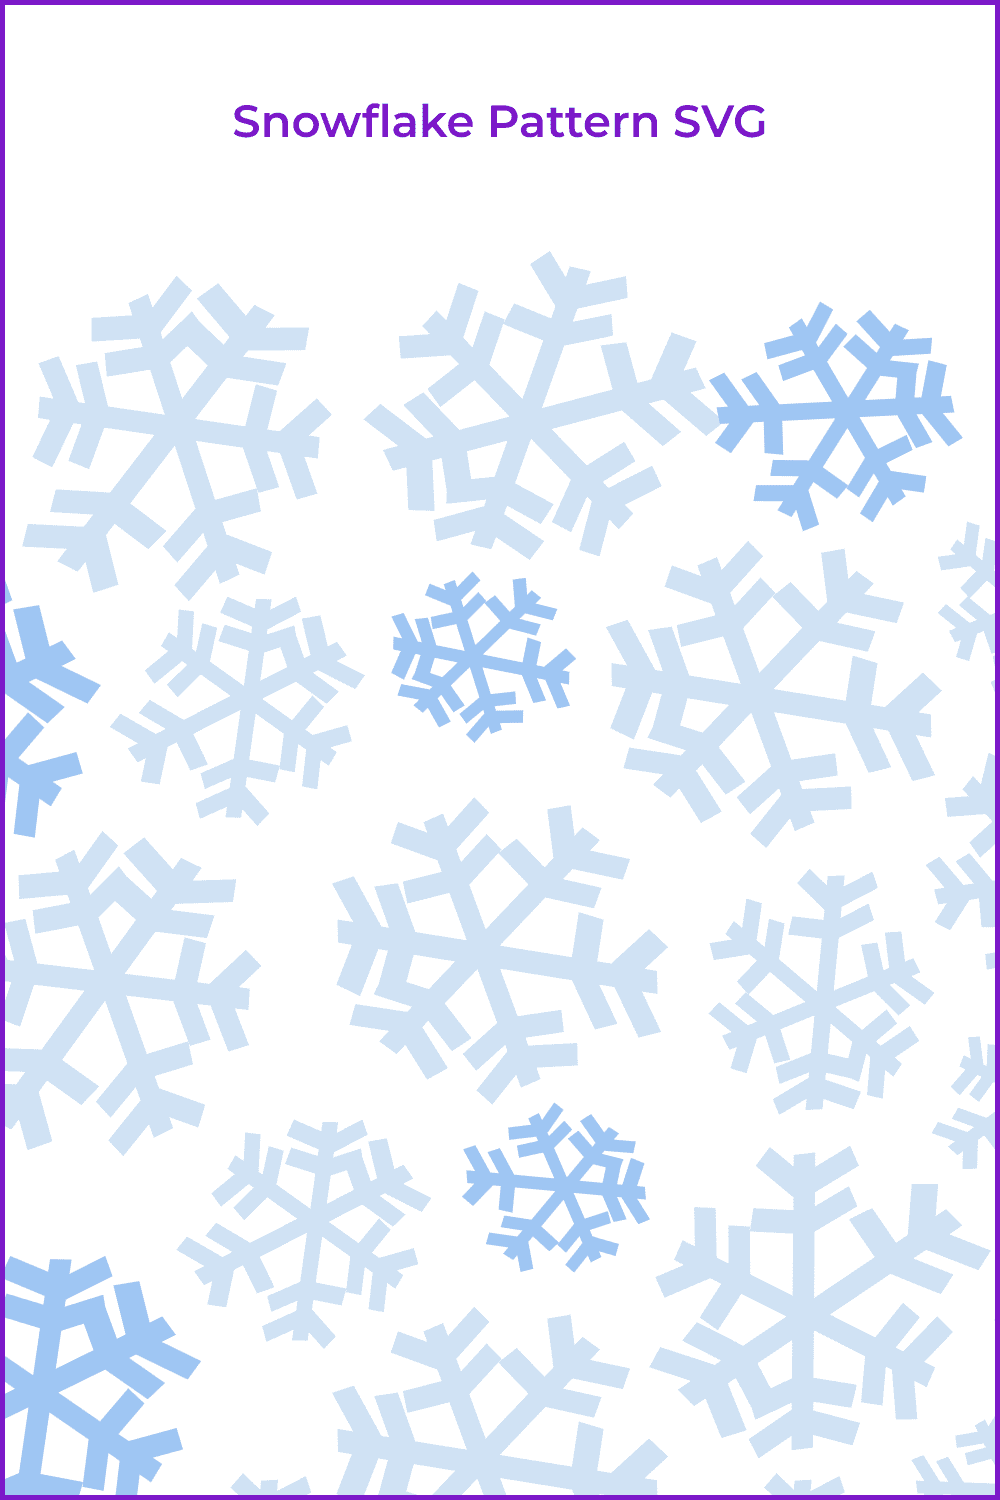 Snowflake Pattern SVG.